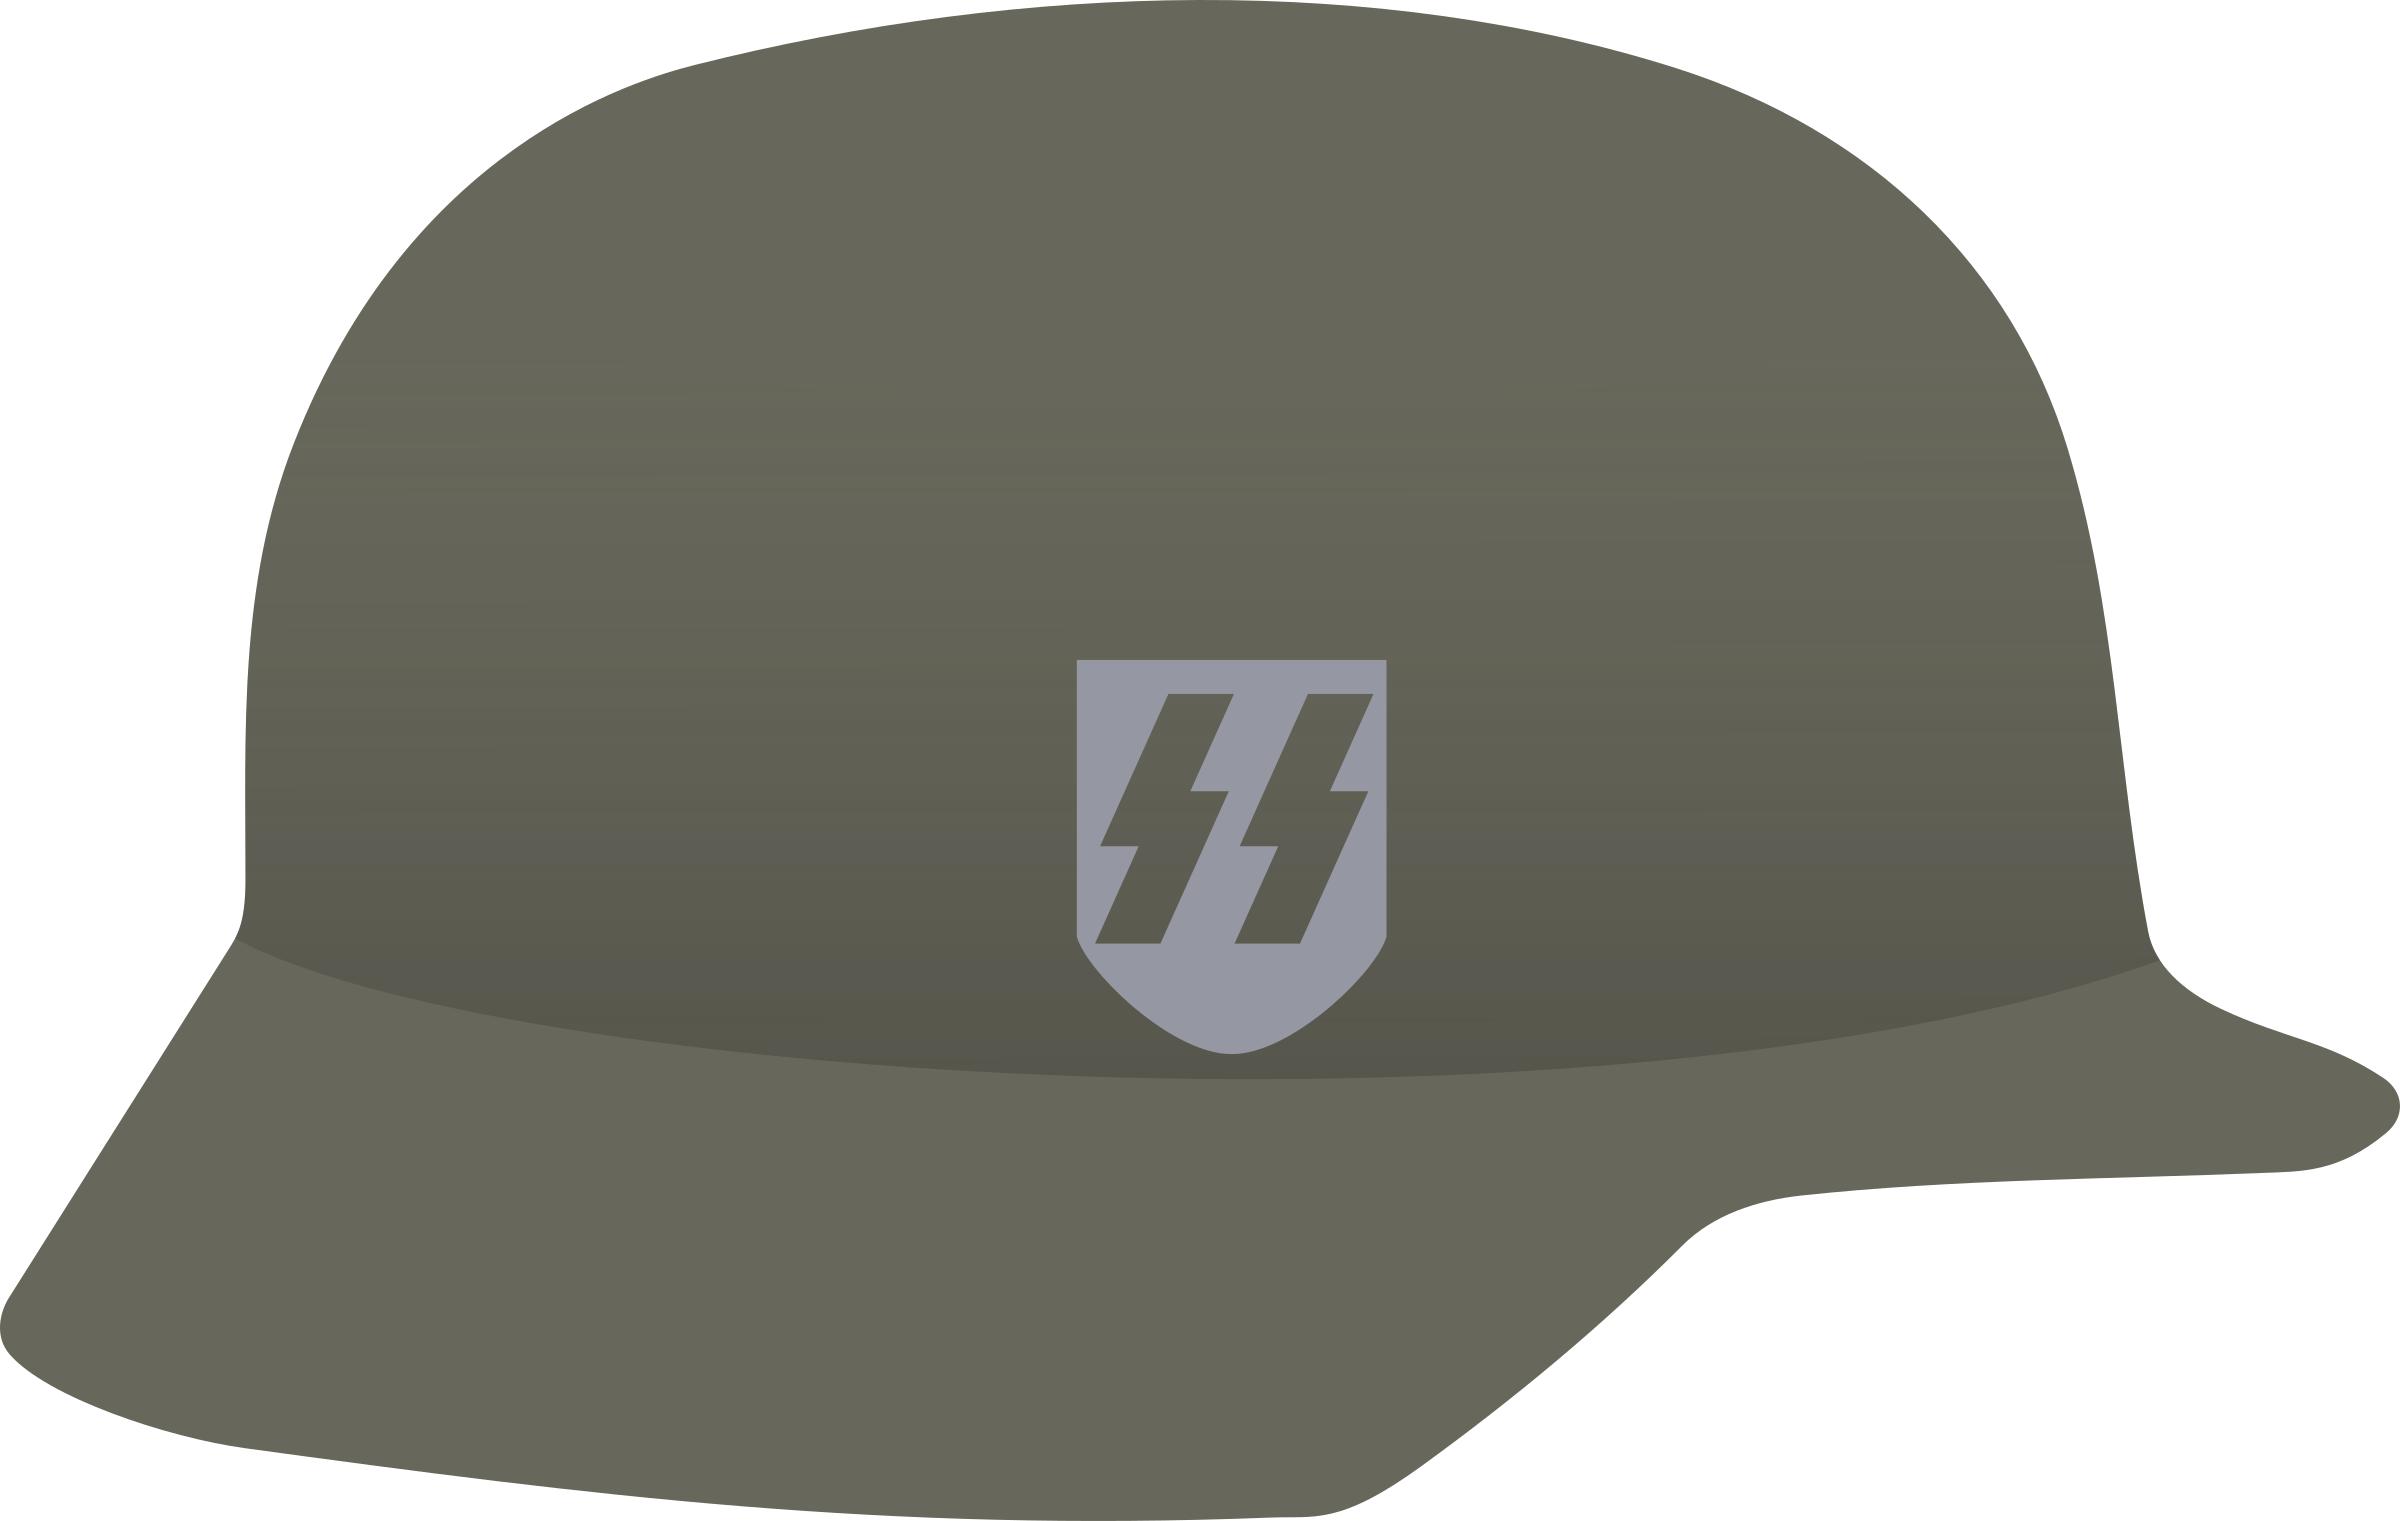 Nazi helmet png